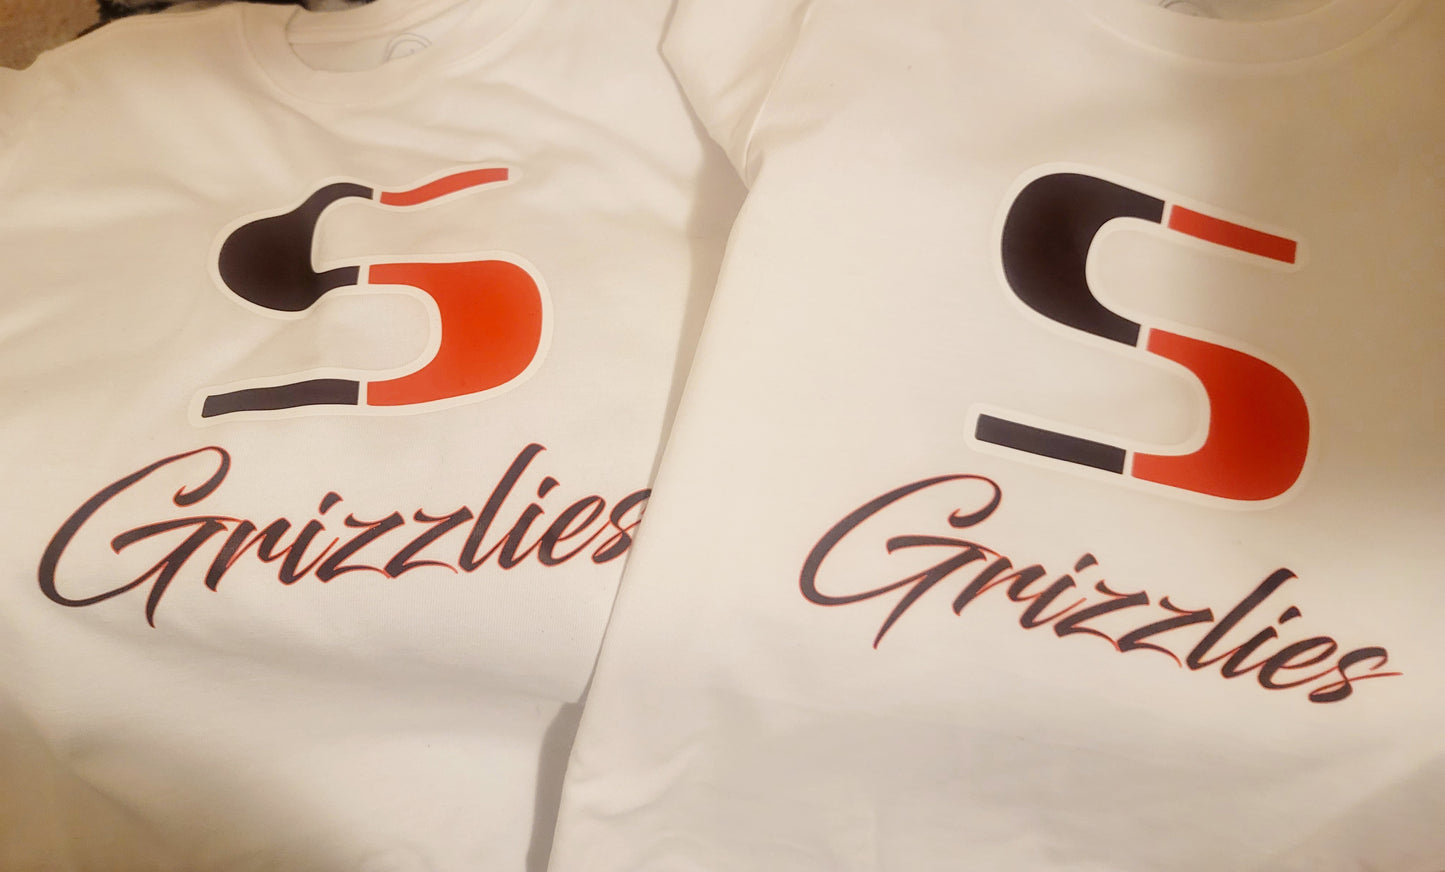 Grizzlies spirit wear (Adult)Sunnyside